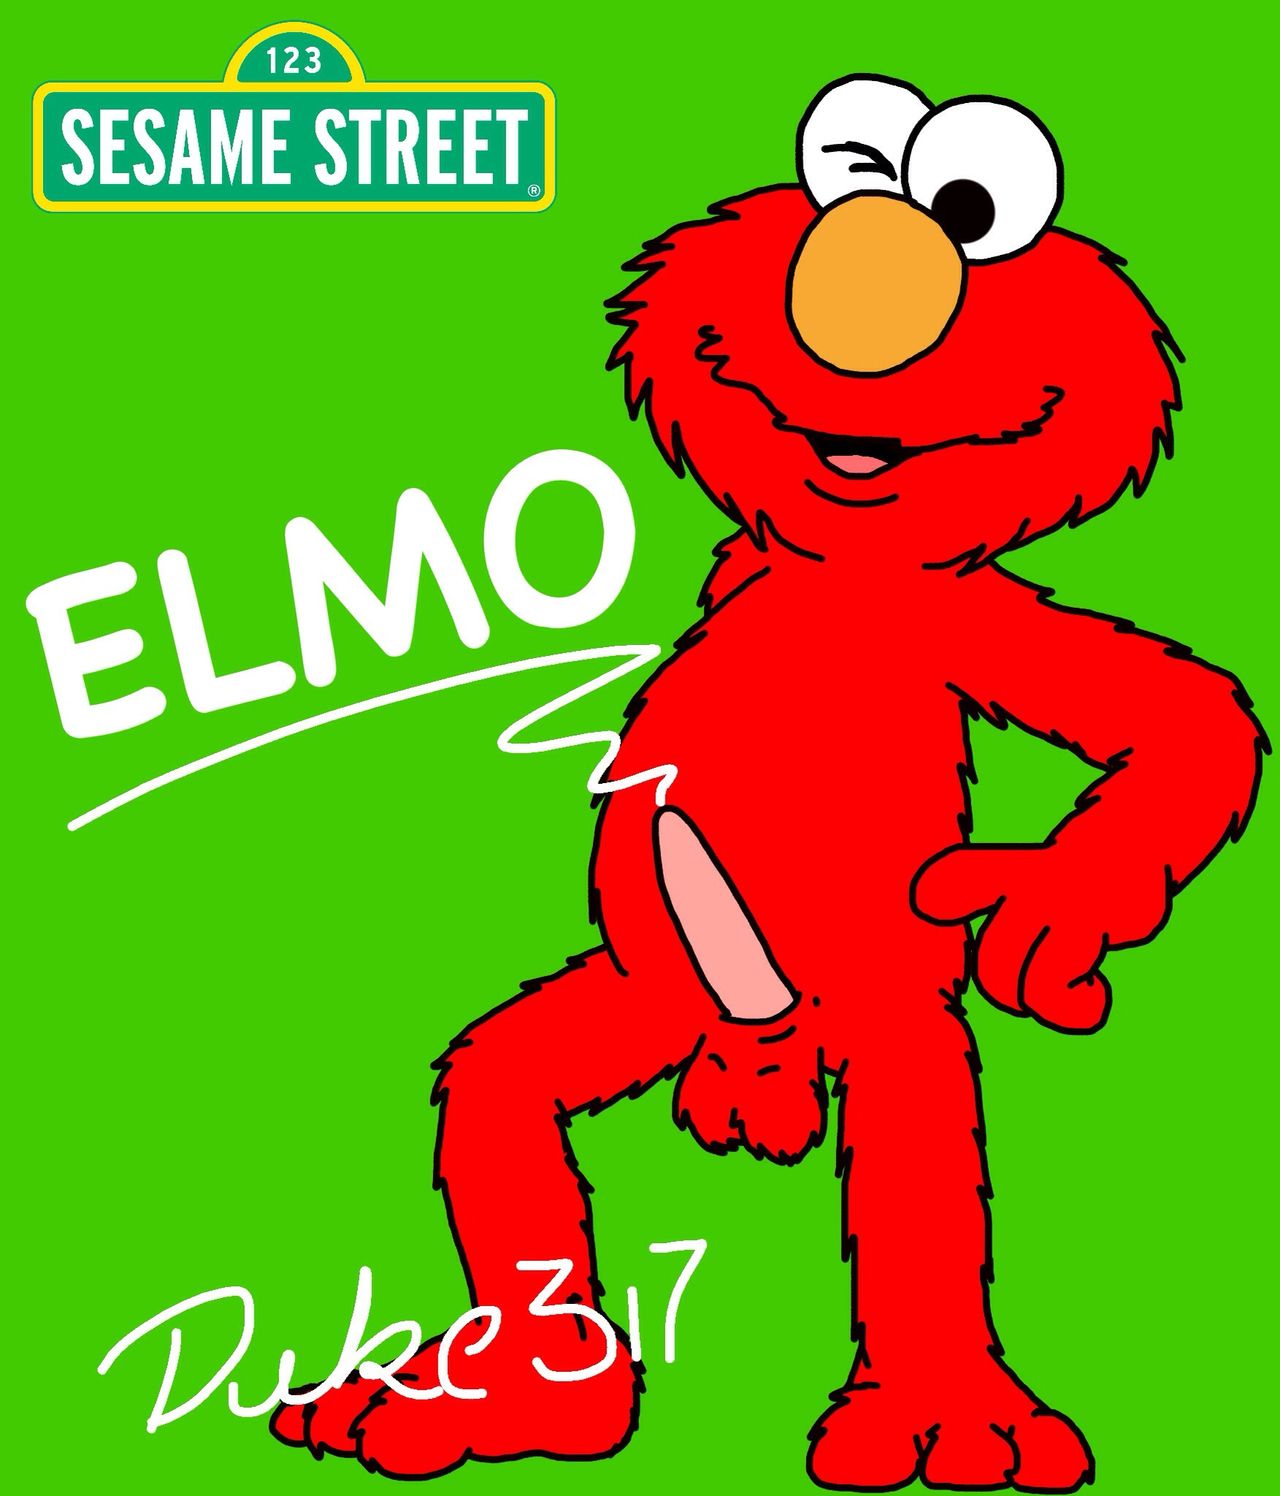 Elmo's adult books & videos